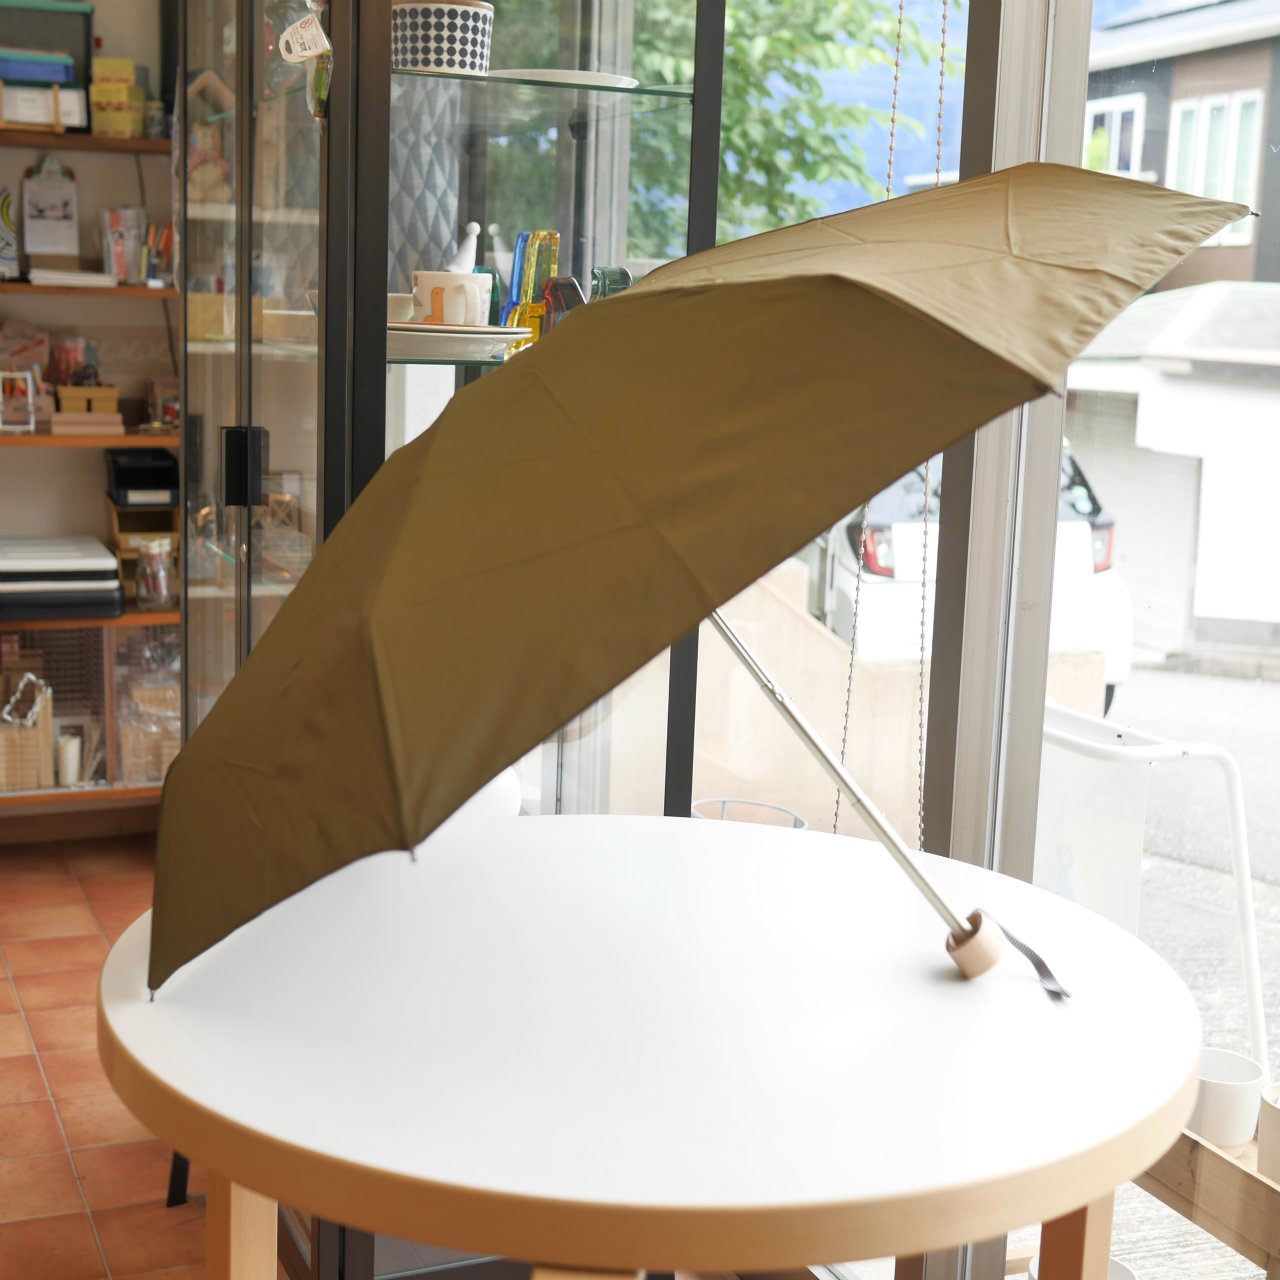 Anatole Paris folding micro-umbrella カーキ